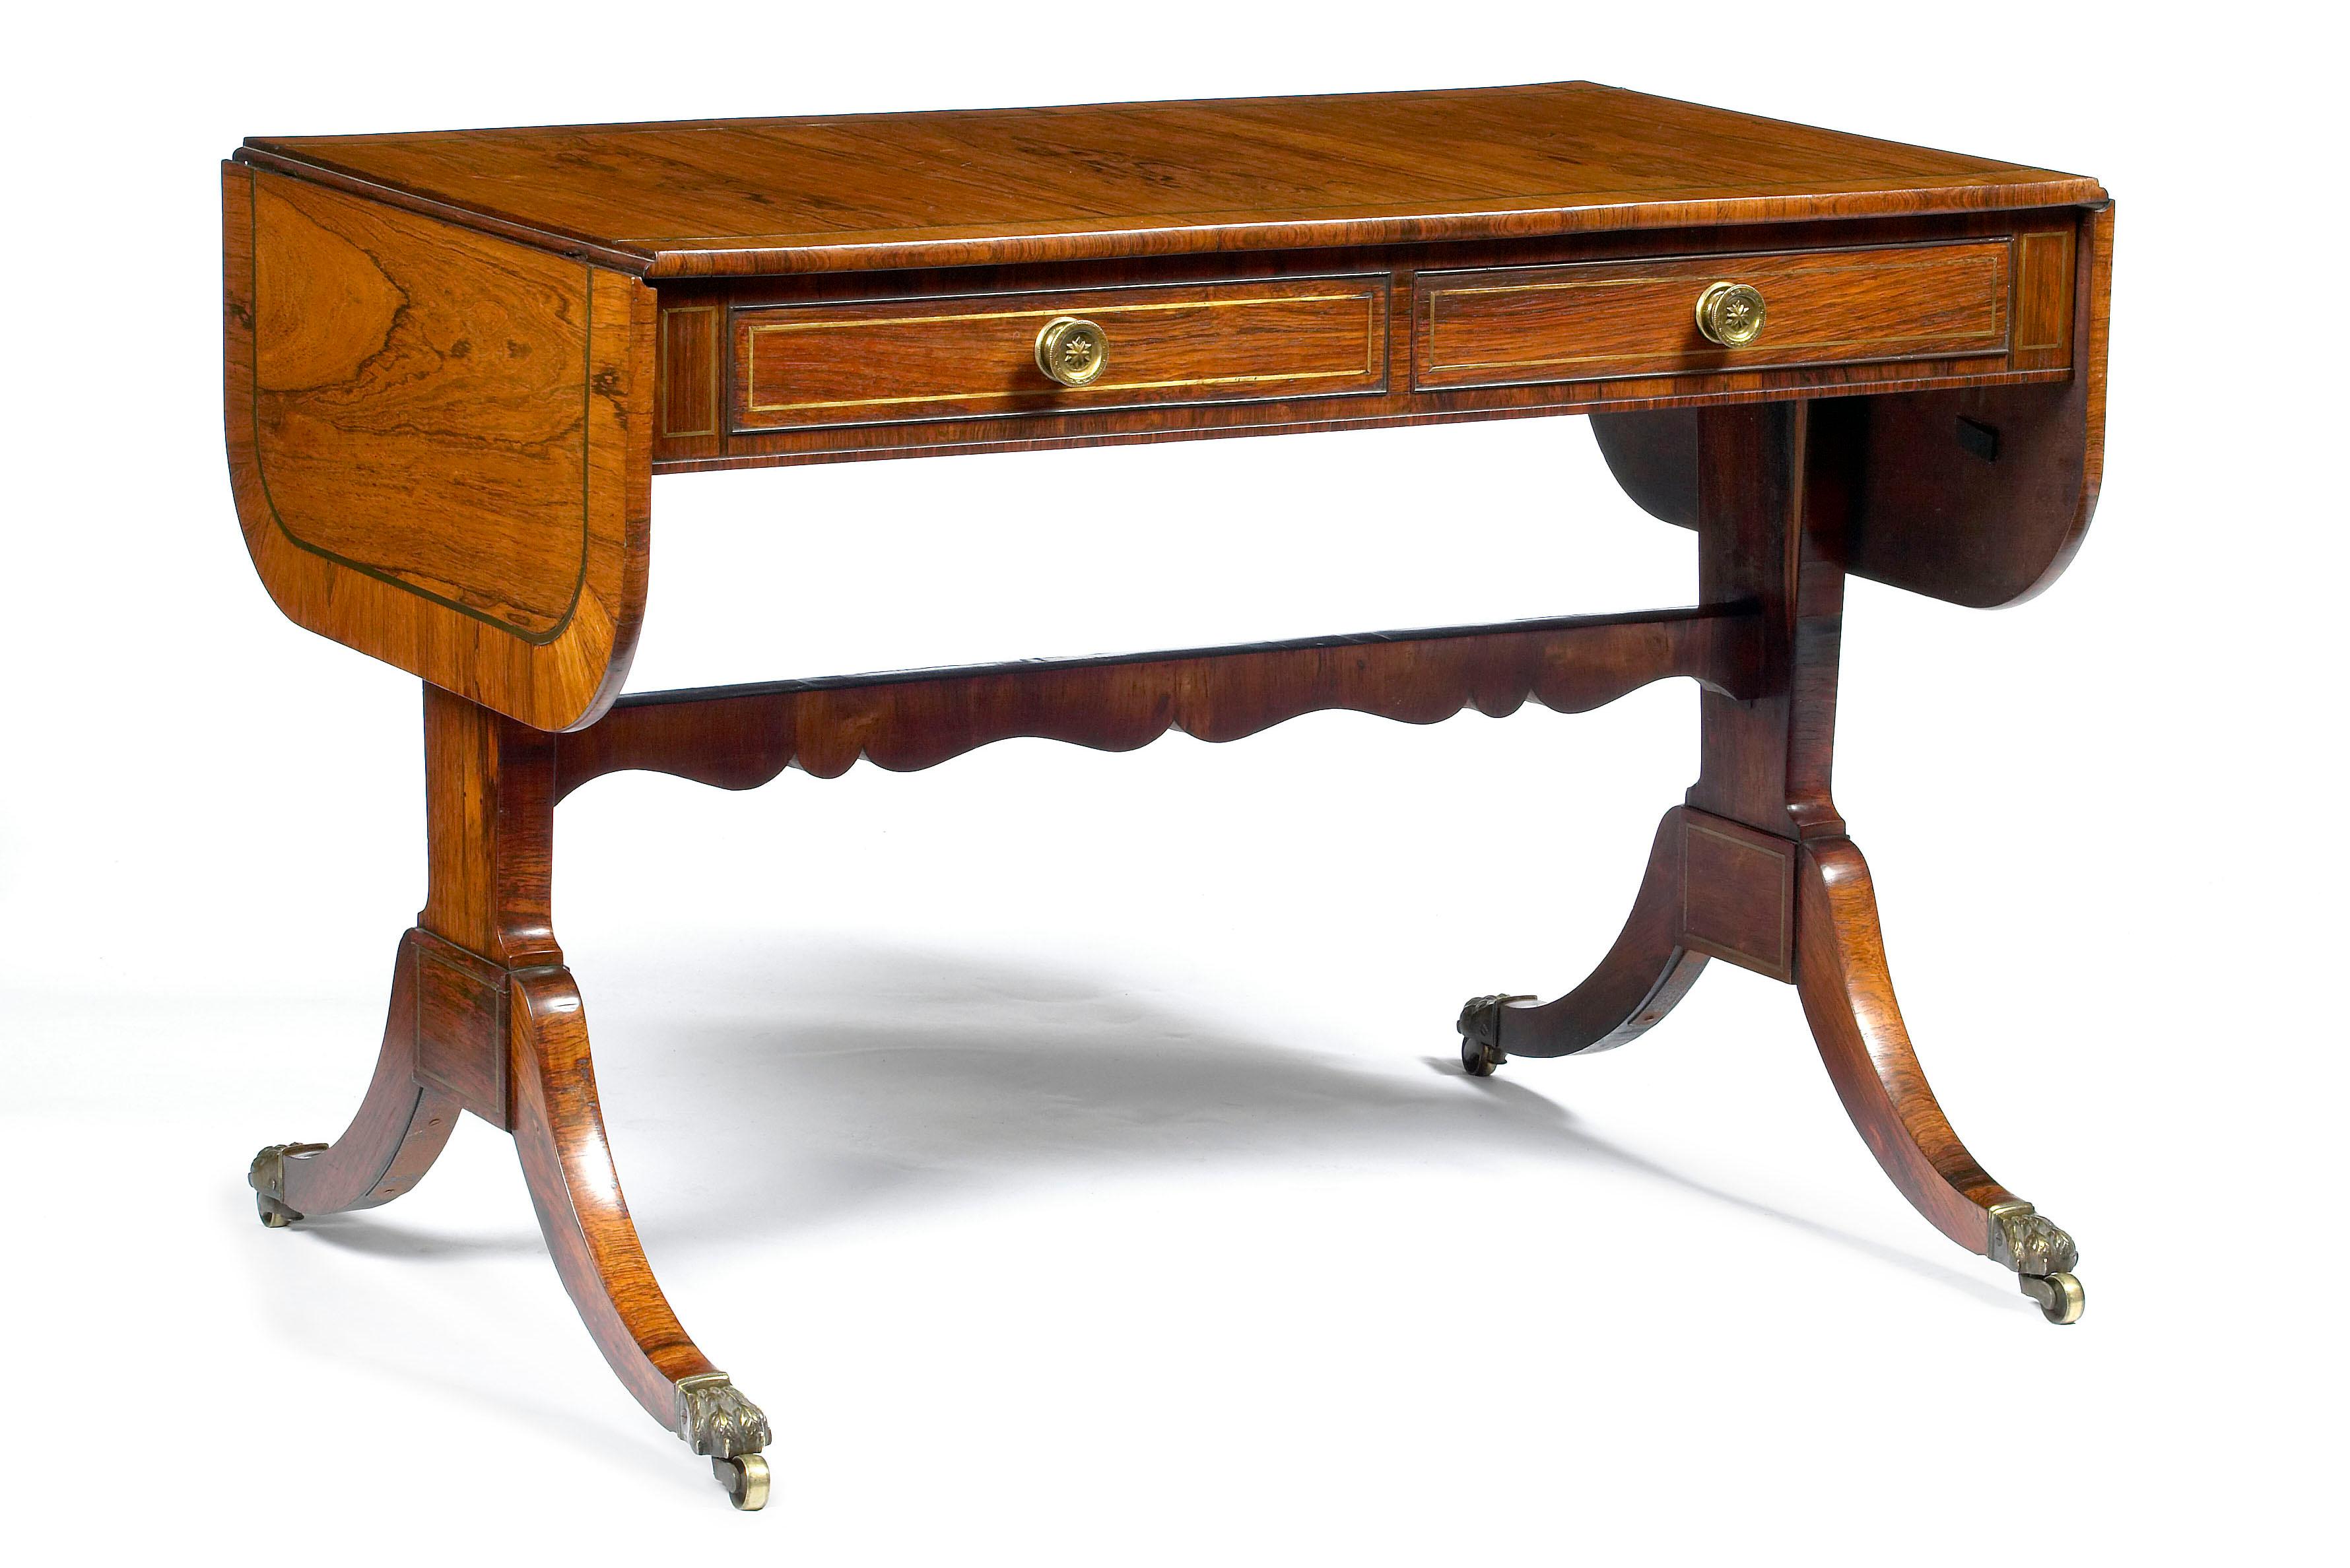 Irish Early 19th Century Regency Sofa Table after Thomas Sheraton For Sale